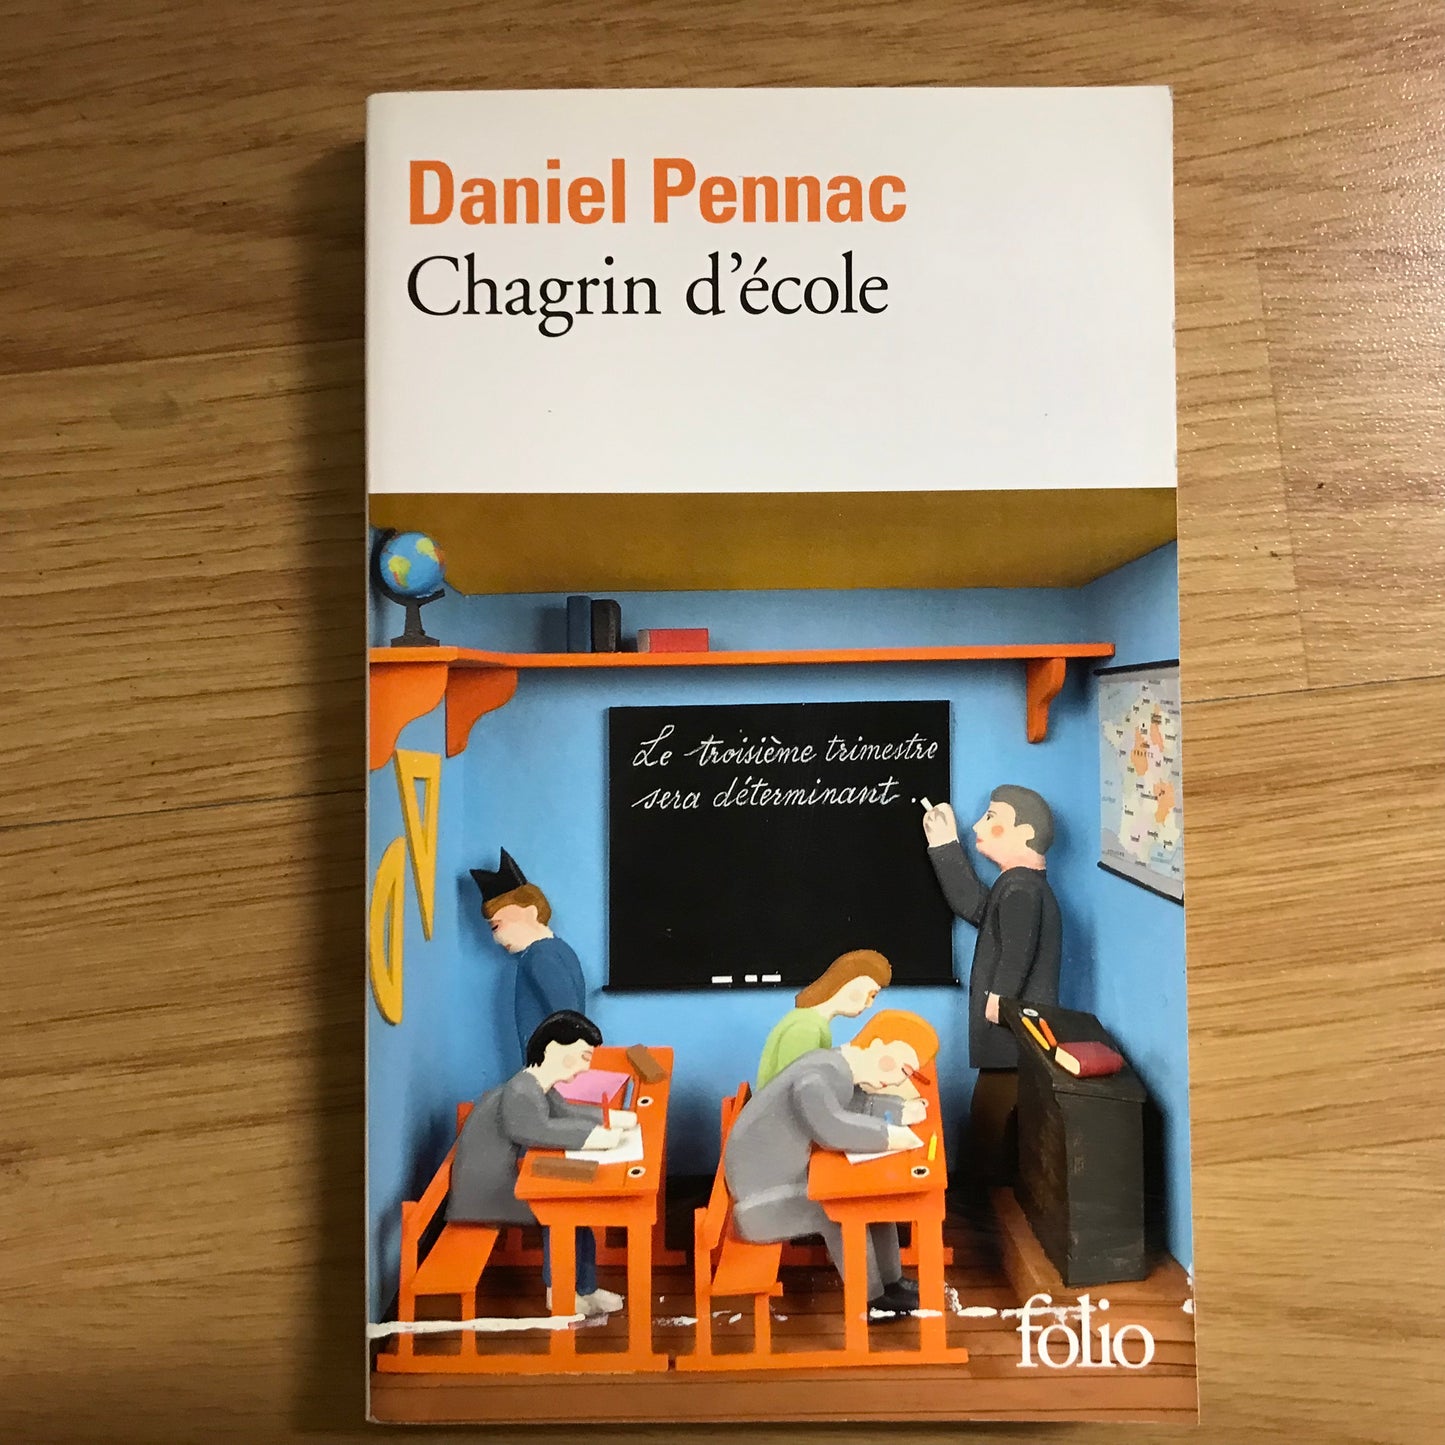 Pennac, Daniel - Chagrin d’école